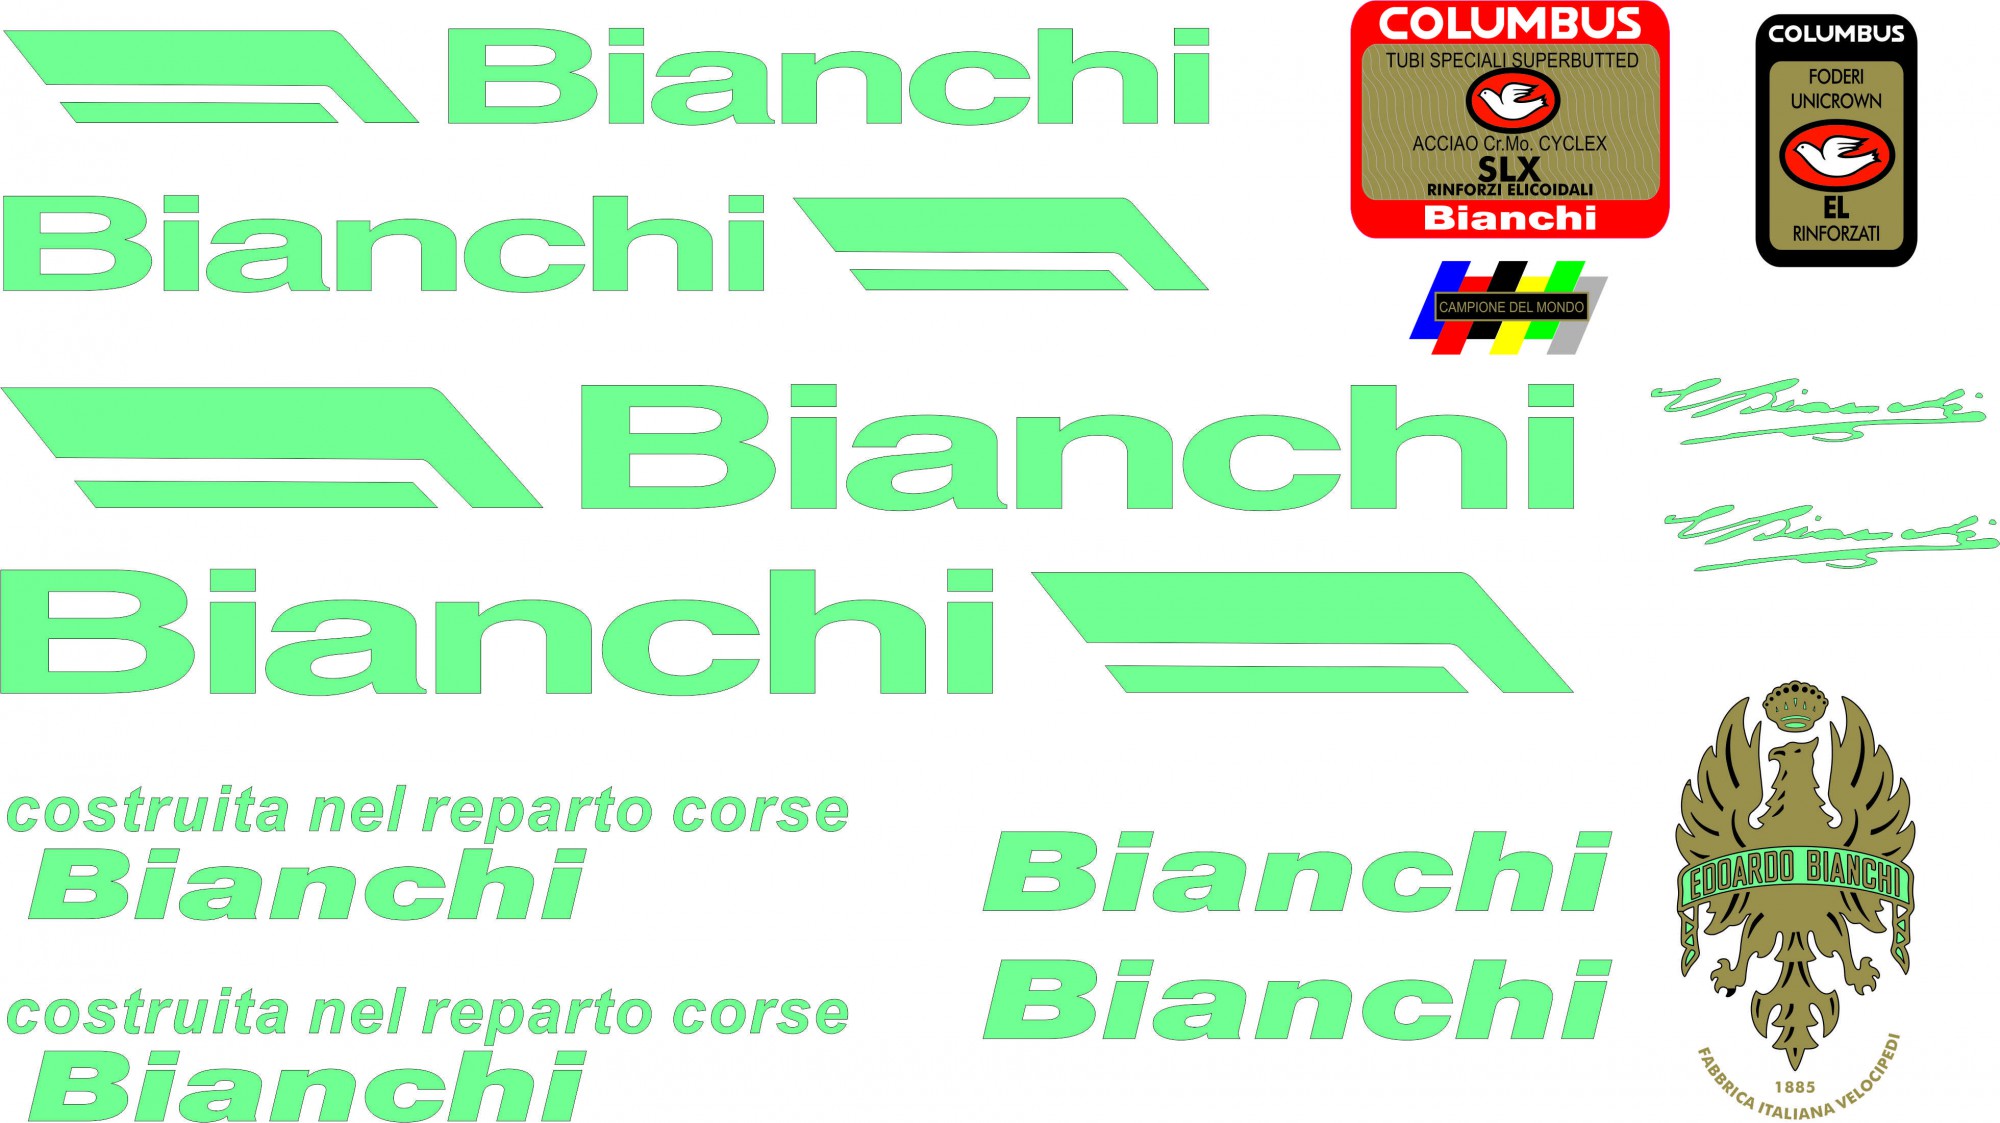 Stemma adesivo sticker COLUMBUS ZETA telaio X Bianchi Rekord bici corsa